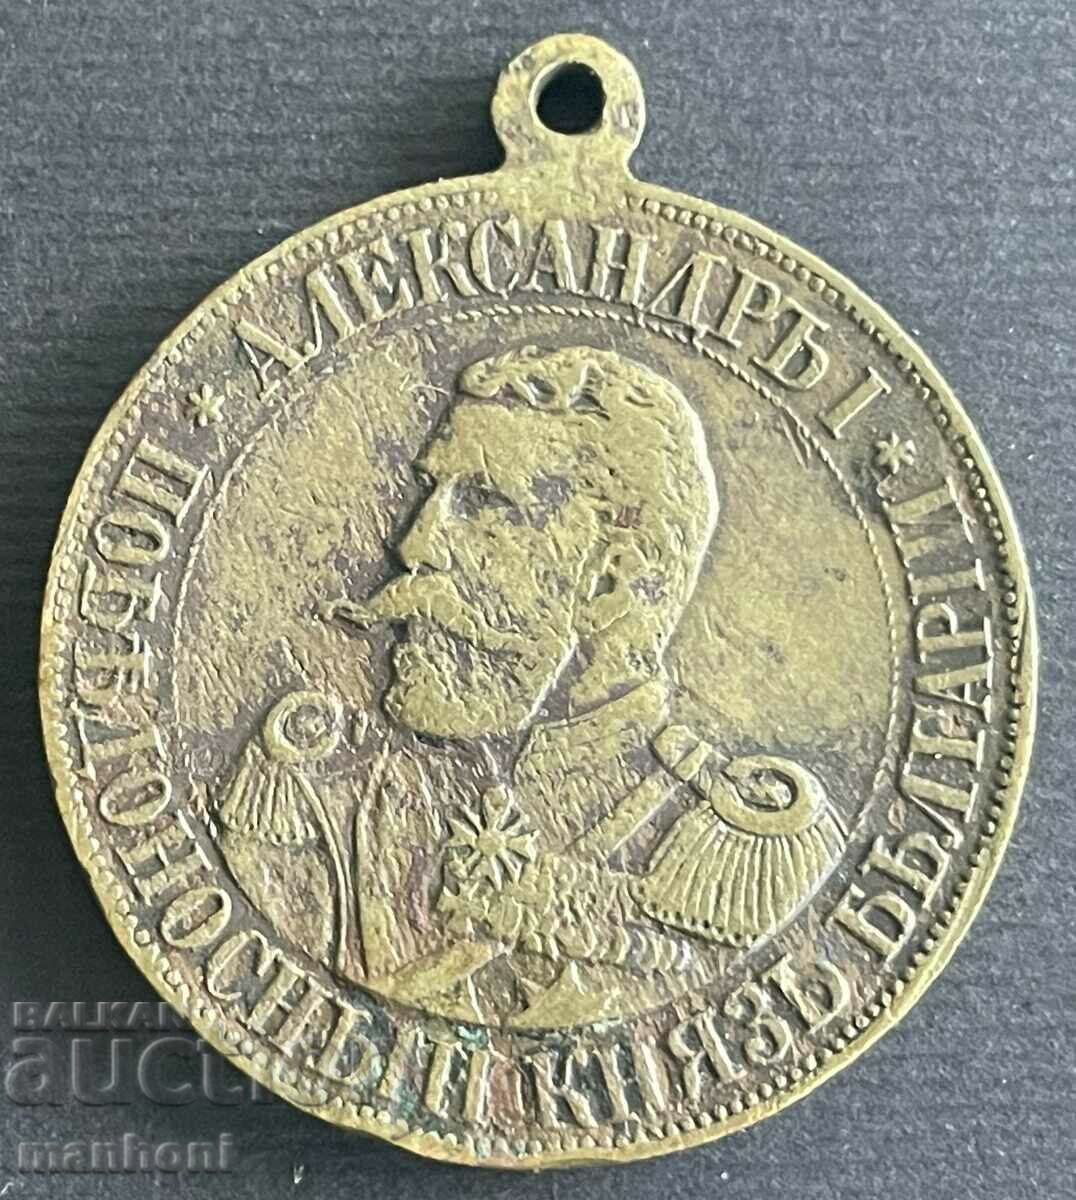 5543 Principatul Bulgariei medalia Prințul Battenberg 1886.